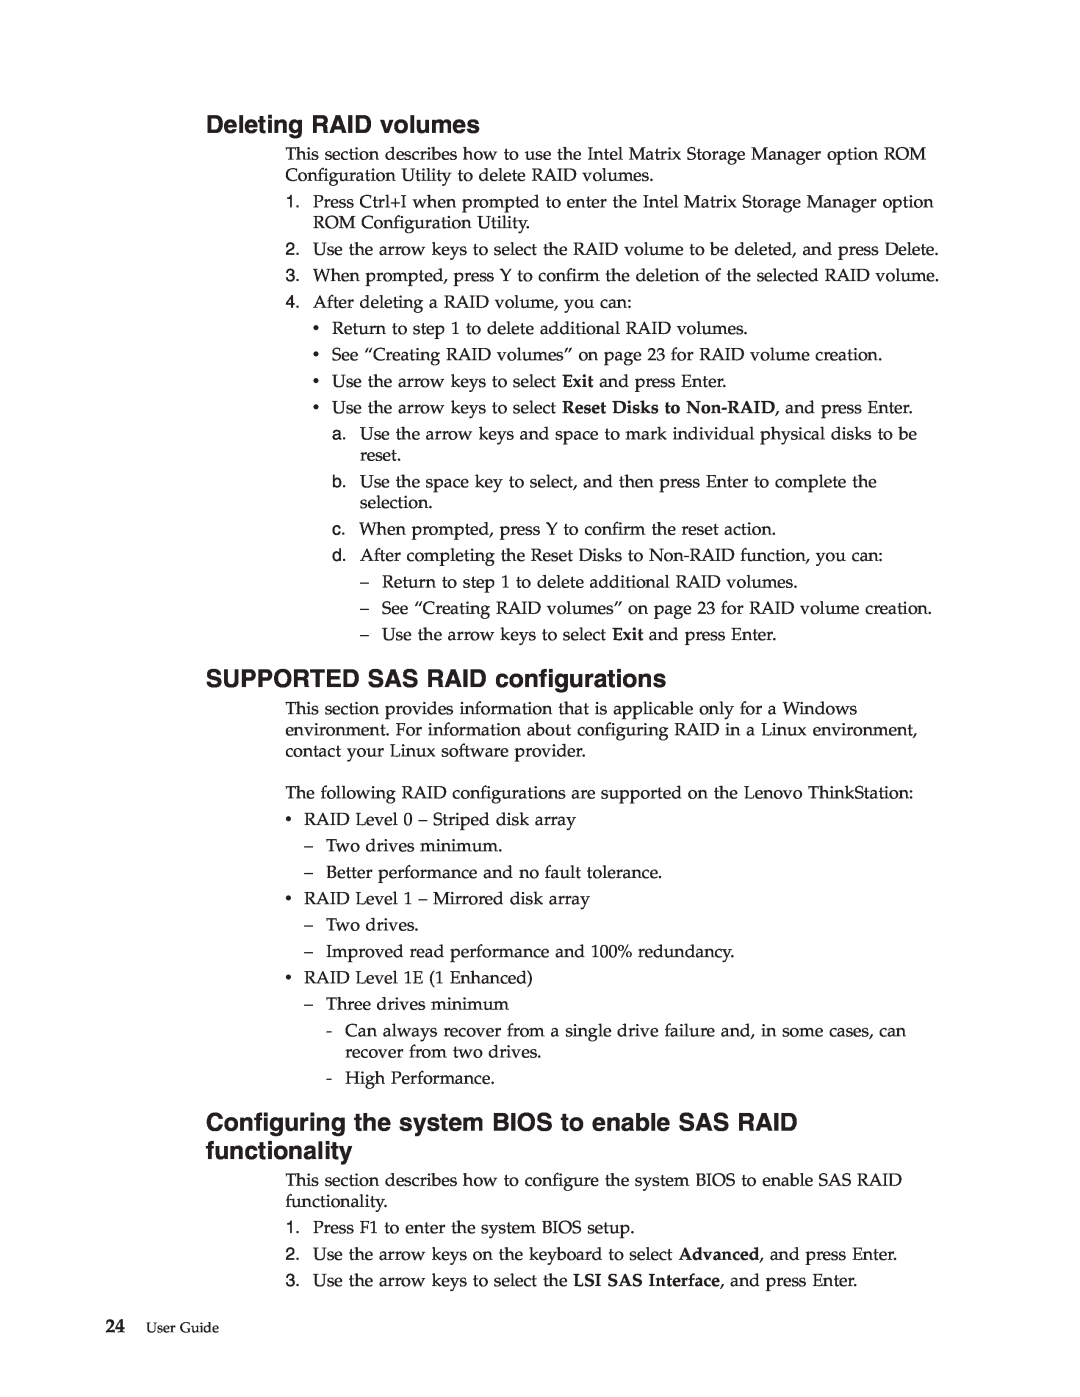 Lenovo 6449, 6493, 6483, 6439, 6427, 6423 manual Deleting RAID volumes, SUPPORTED SAS RAID configurations 